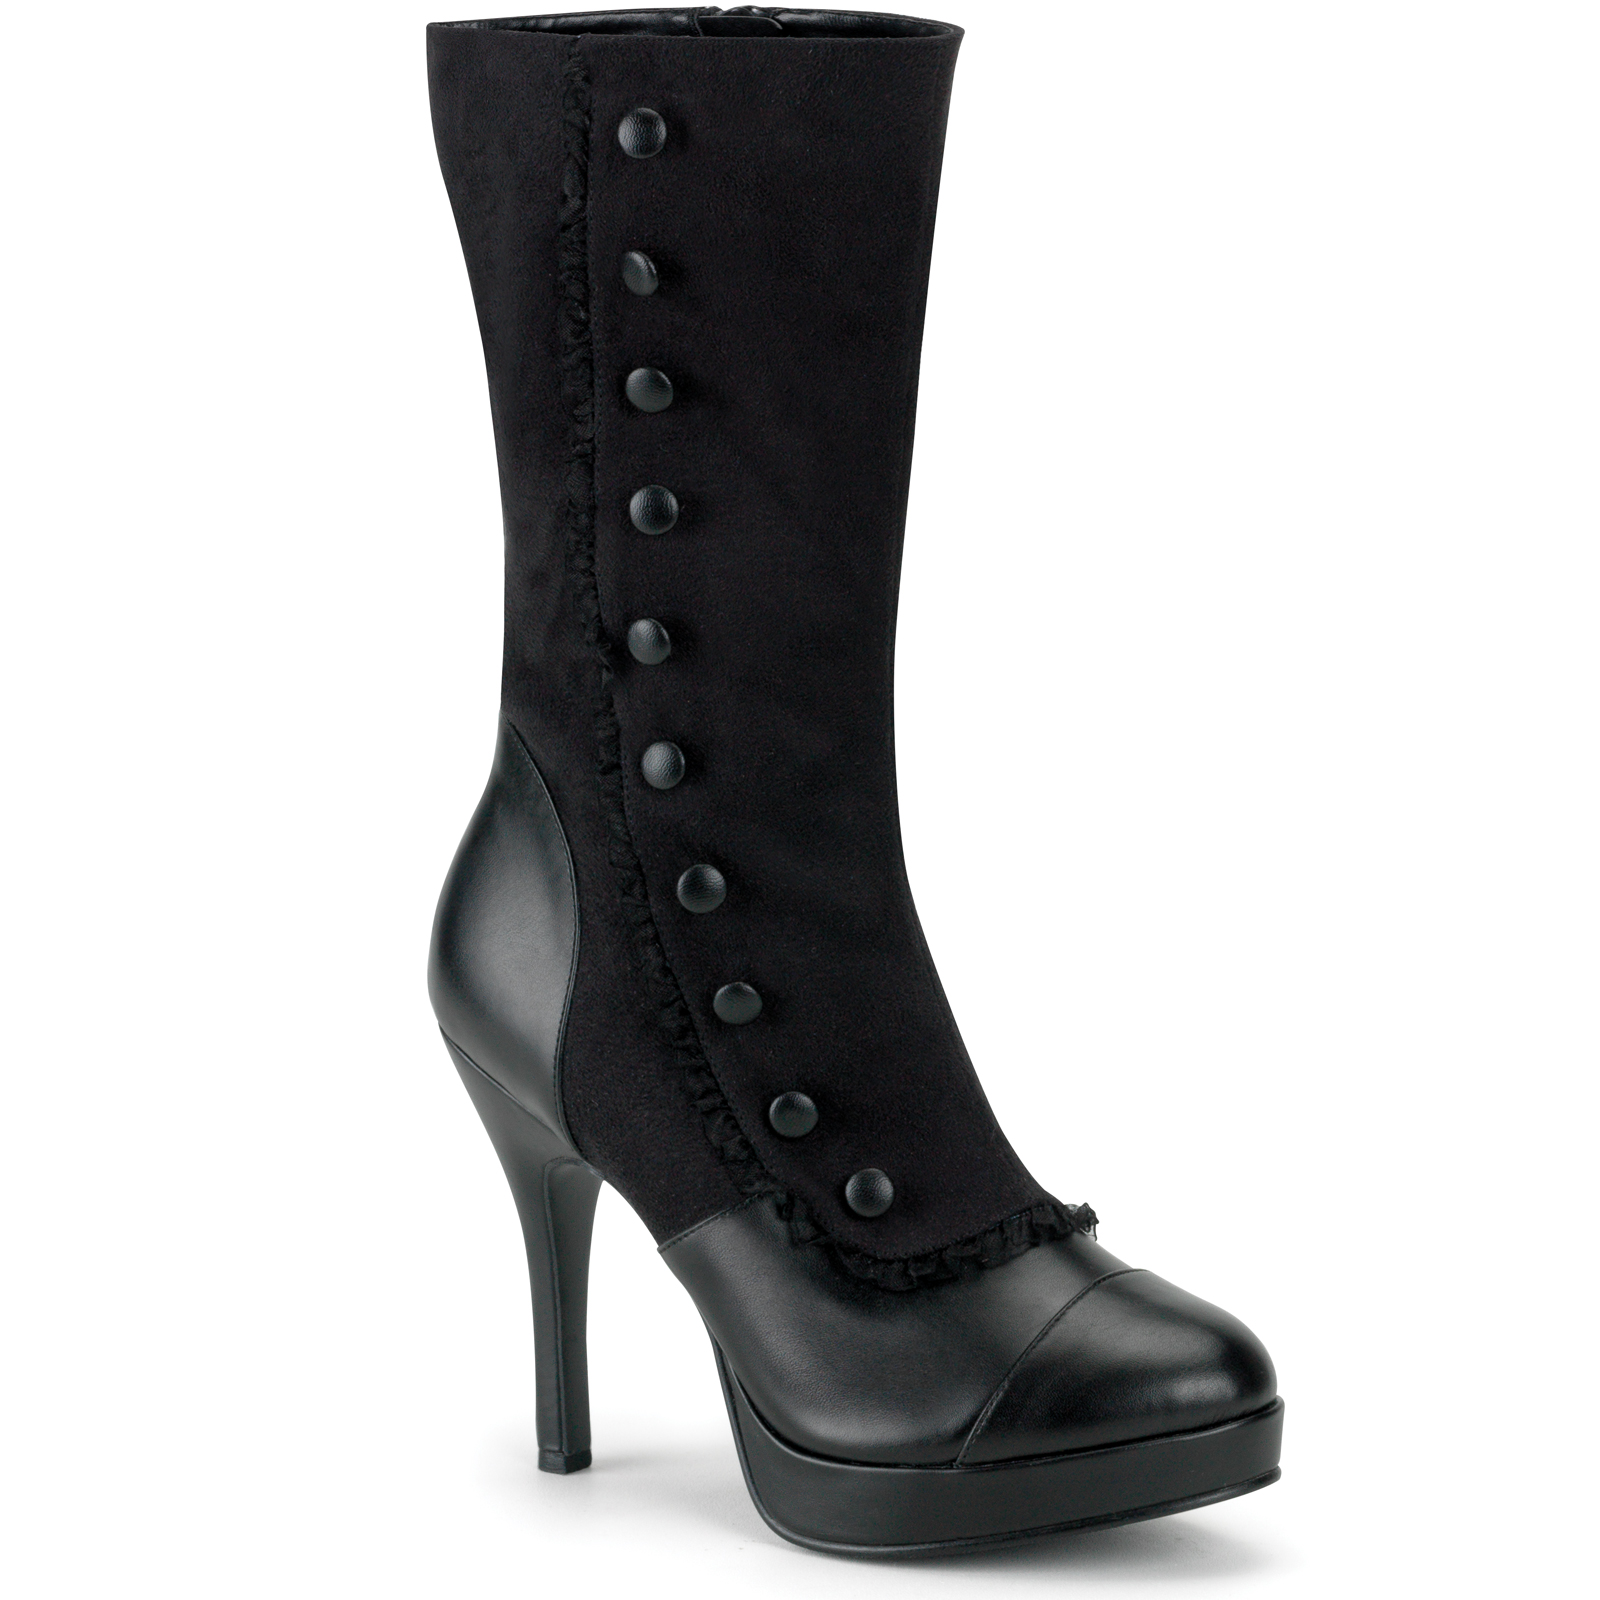 Pleaser Shoes Women's Splendor (Black) Adult Boots - Black - 11